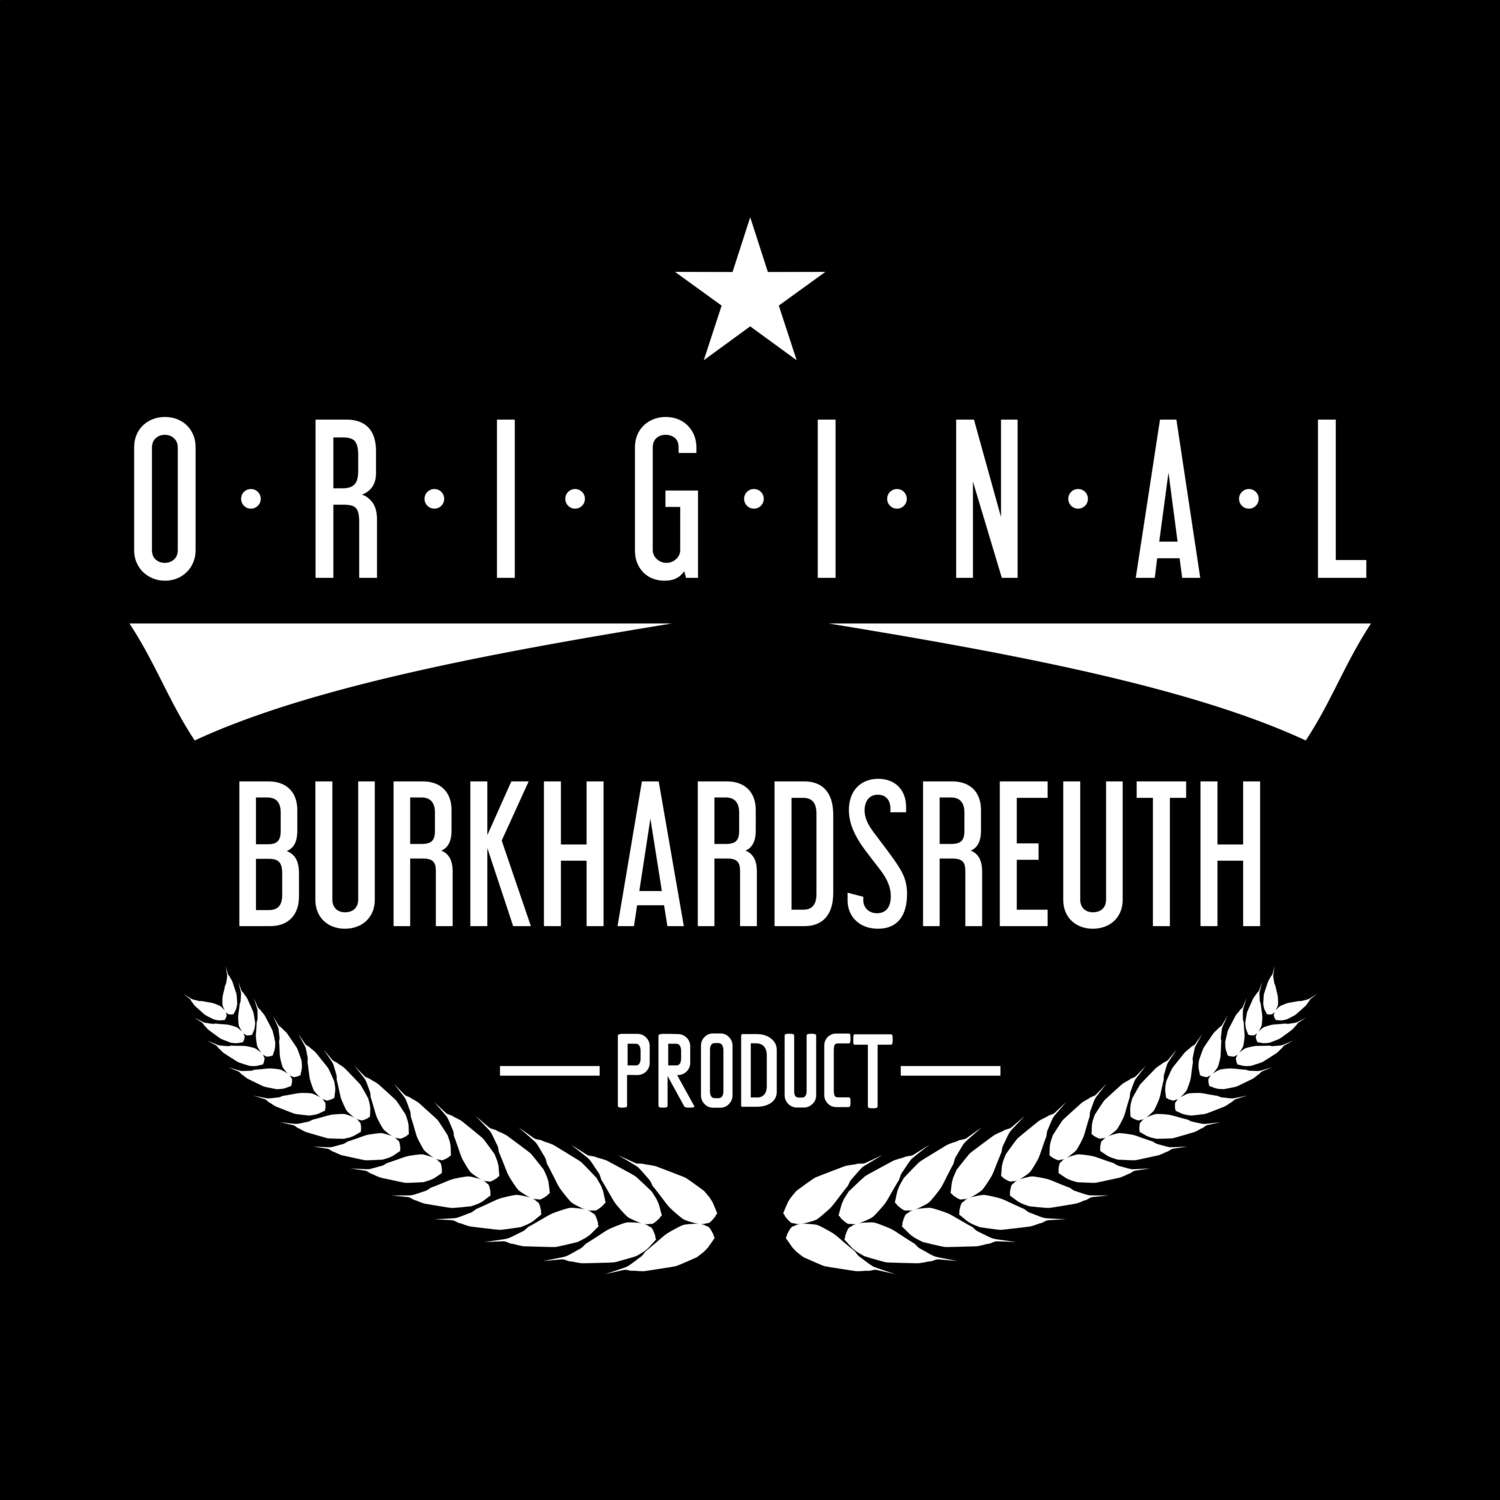 Burkhardsreuth T-Shirt »Original Product«